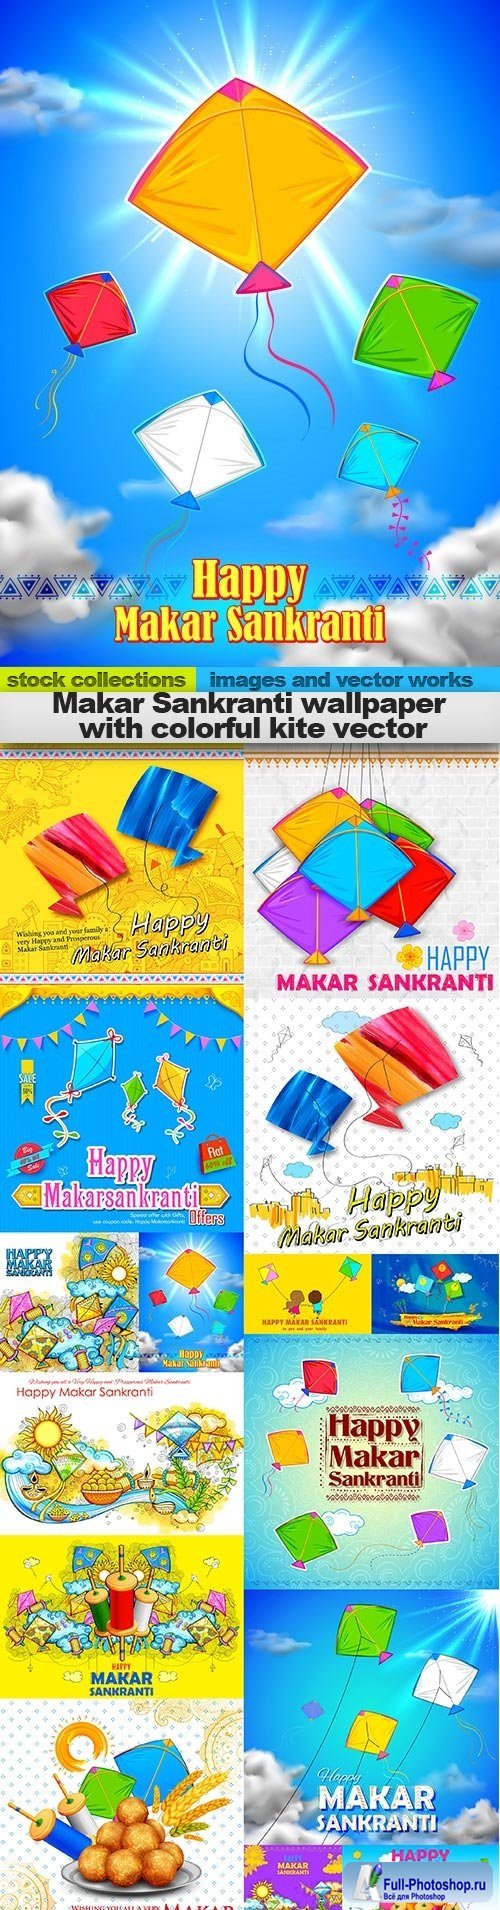 Makar Sankranti wallpaper with colorful kite vector